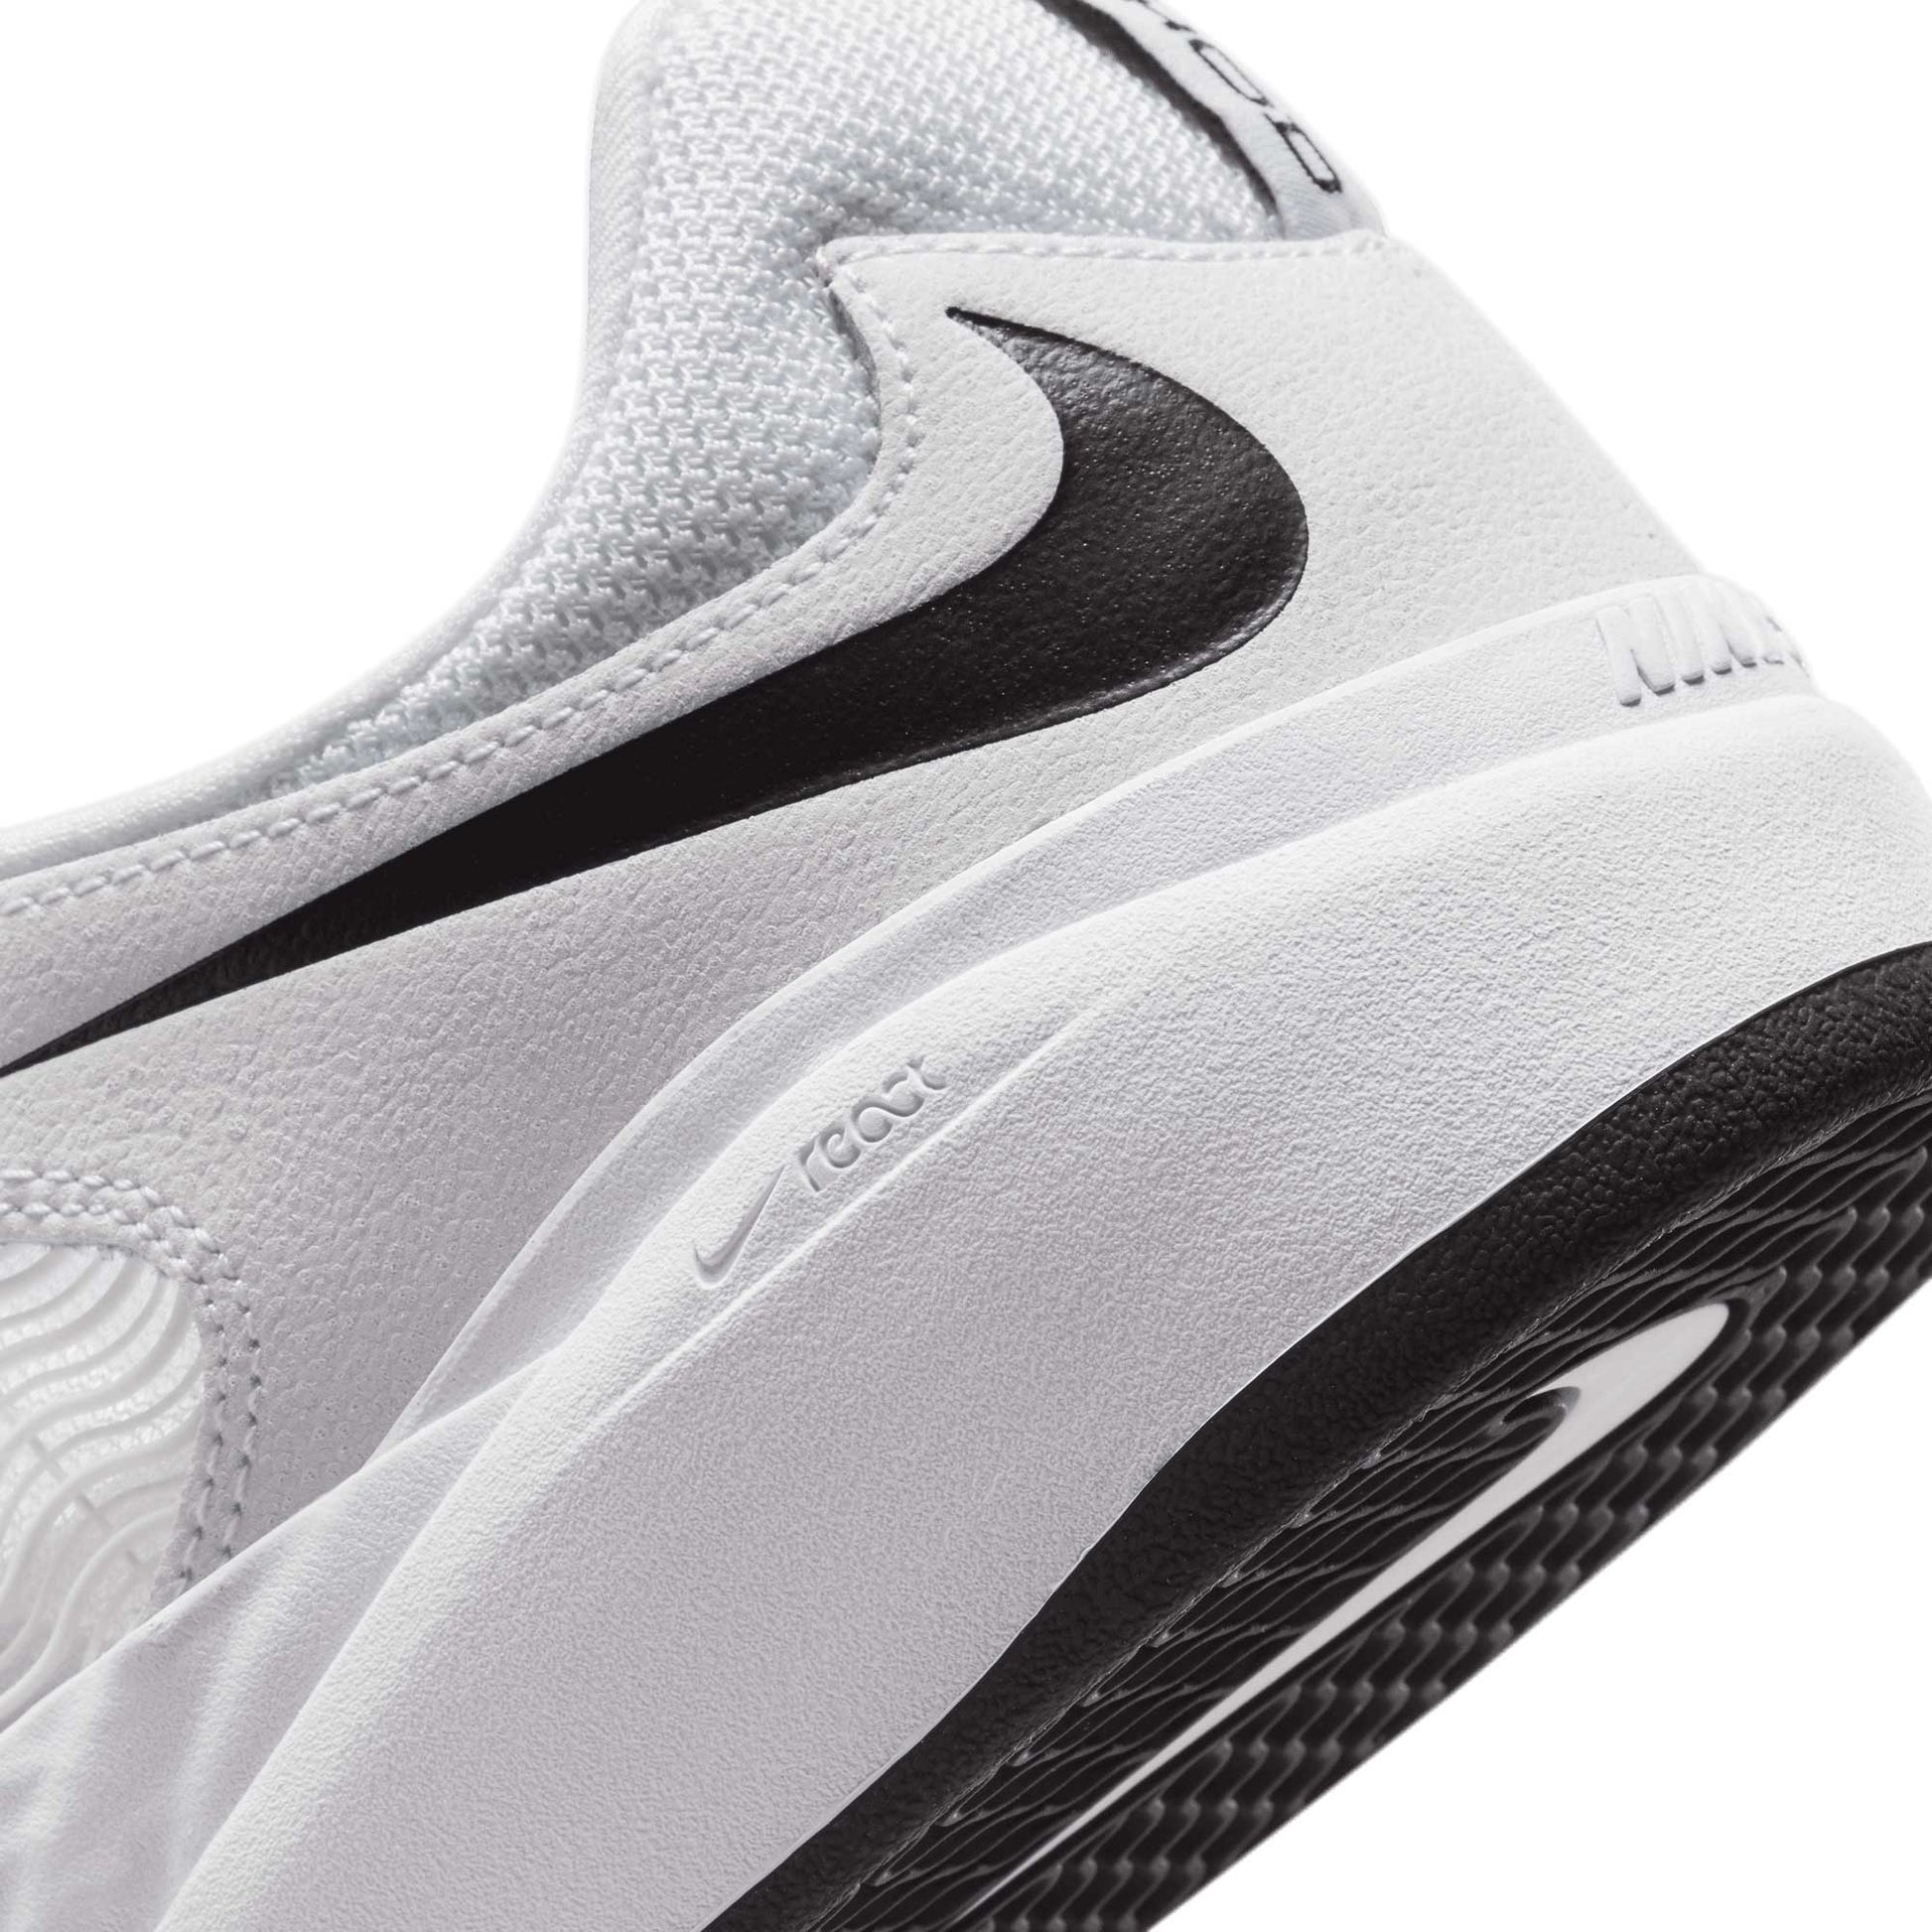 Nike SB Ishod Wair Premium, white/black-white-black - Tiki Room Skateboards - 11